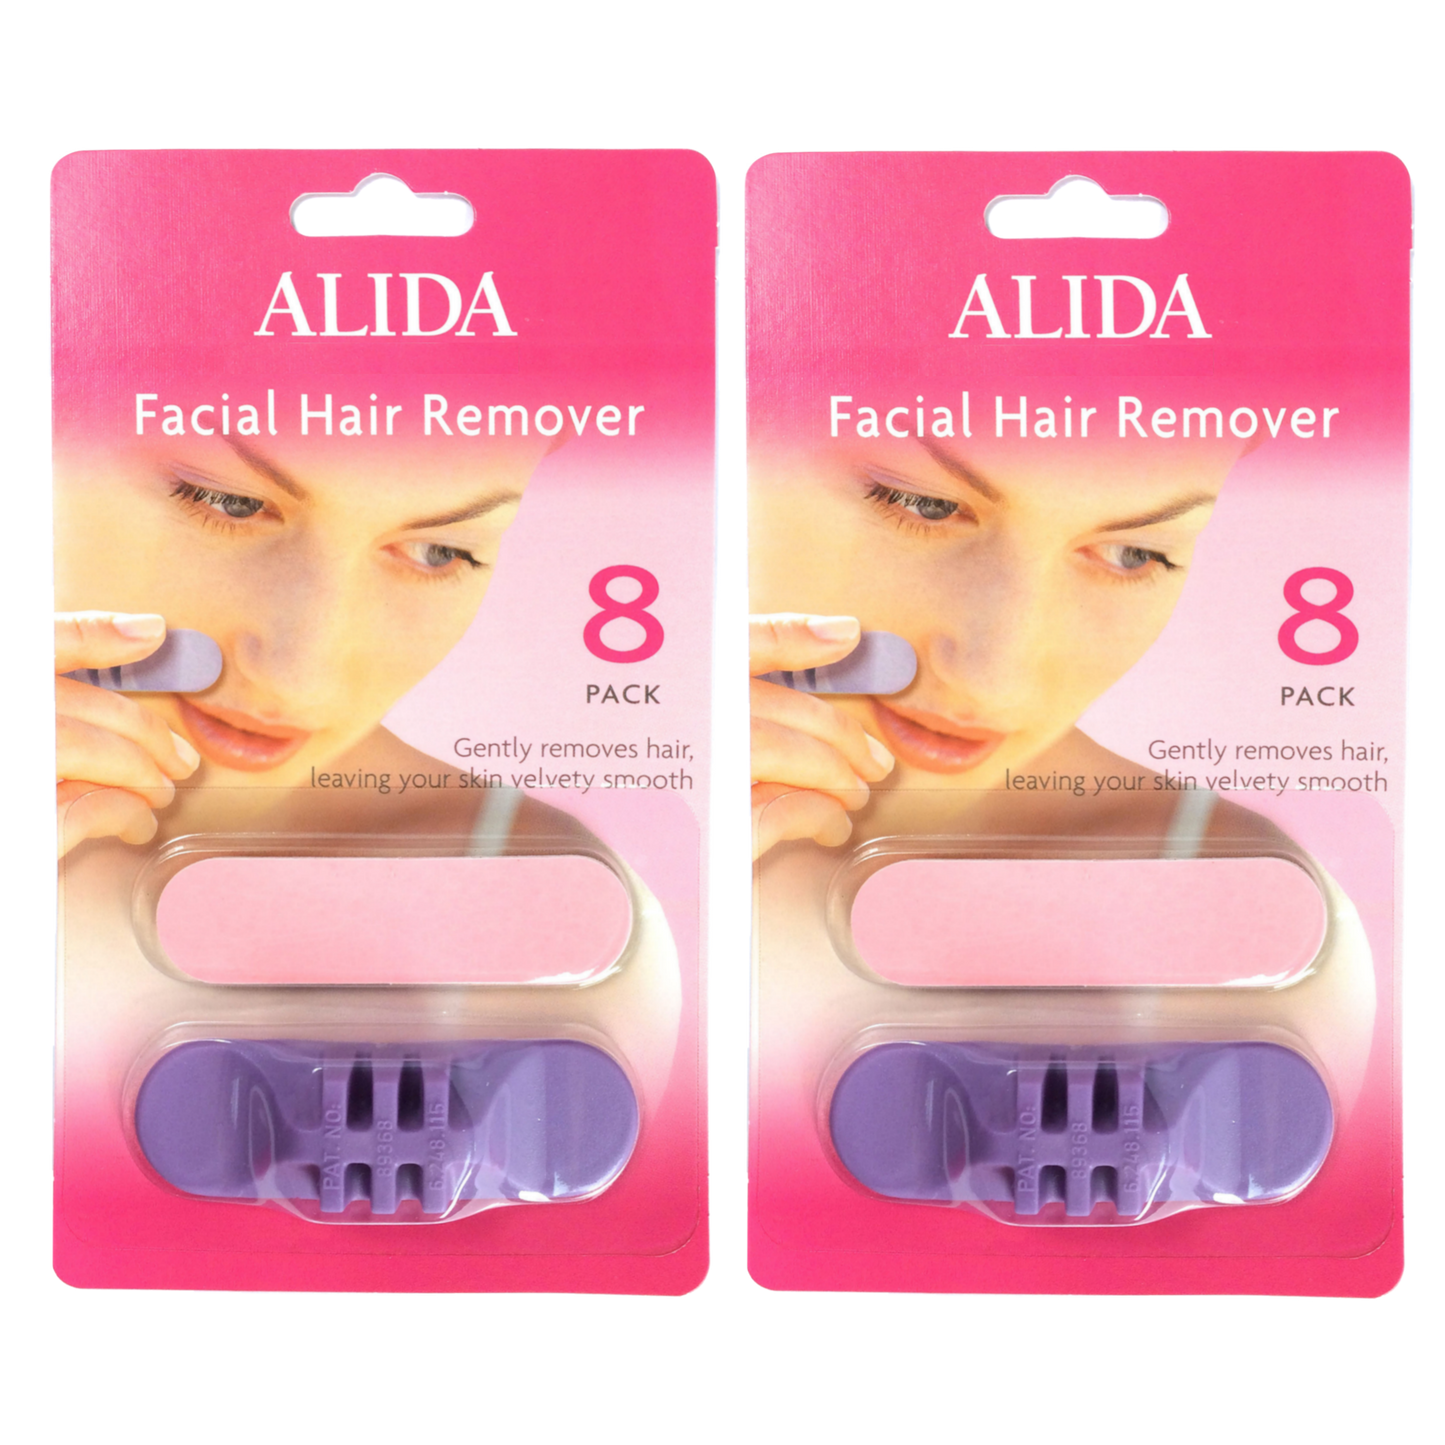 Alida Facial Hair Remover Twin pack